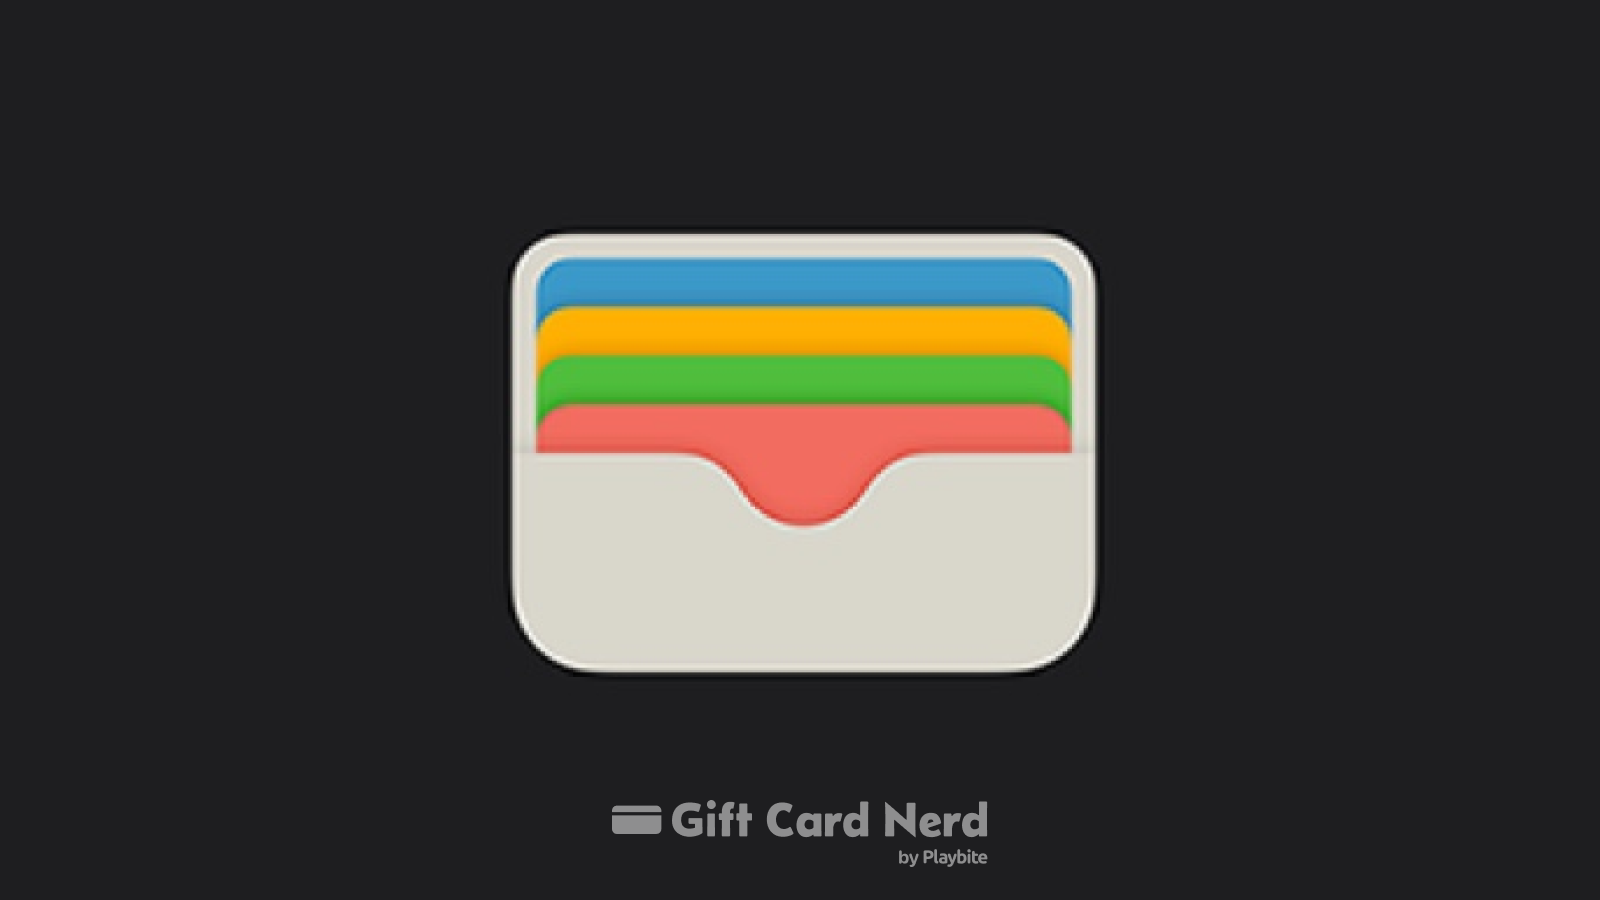 Can I Use an Apple Gift Card on Cash App?